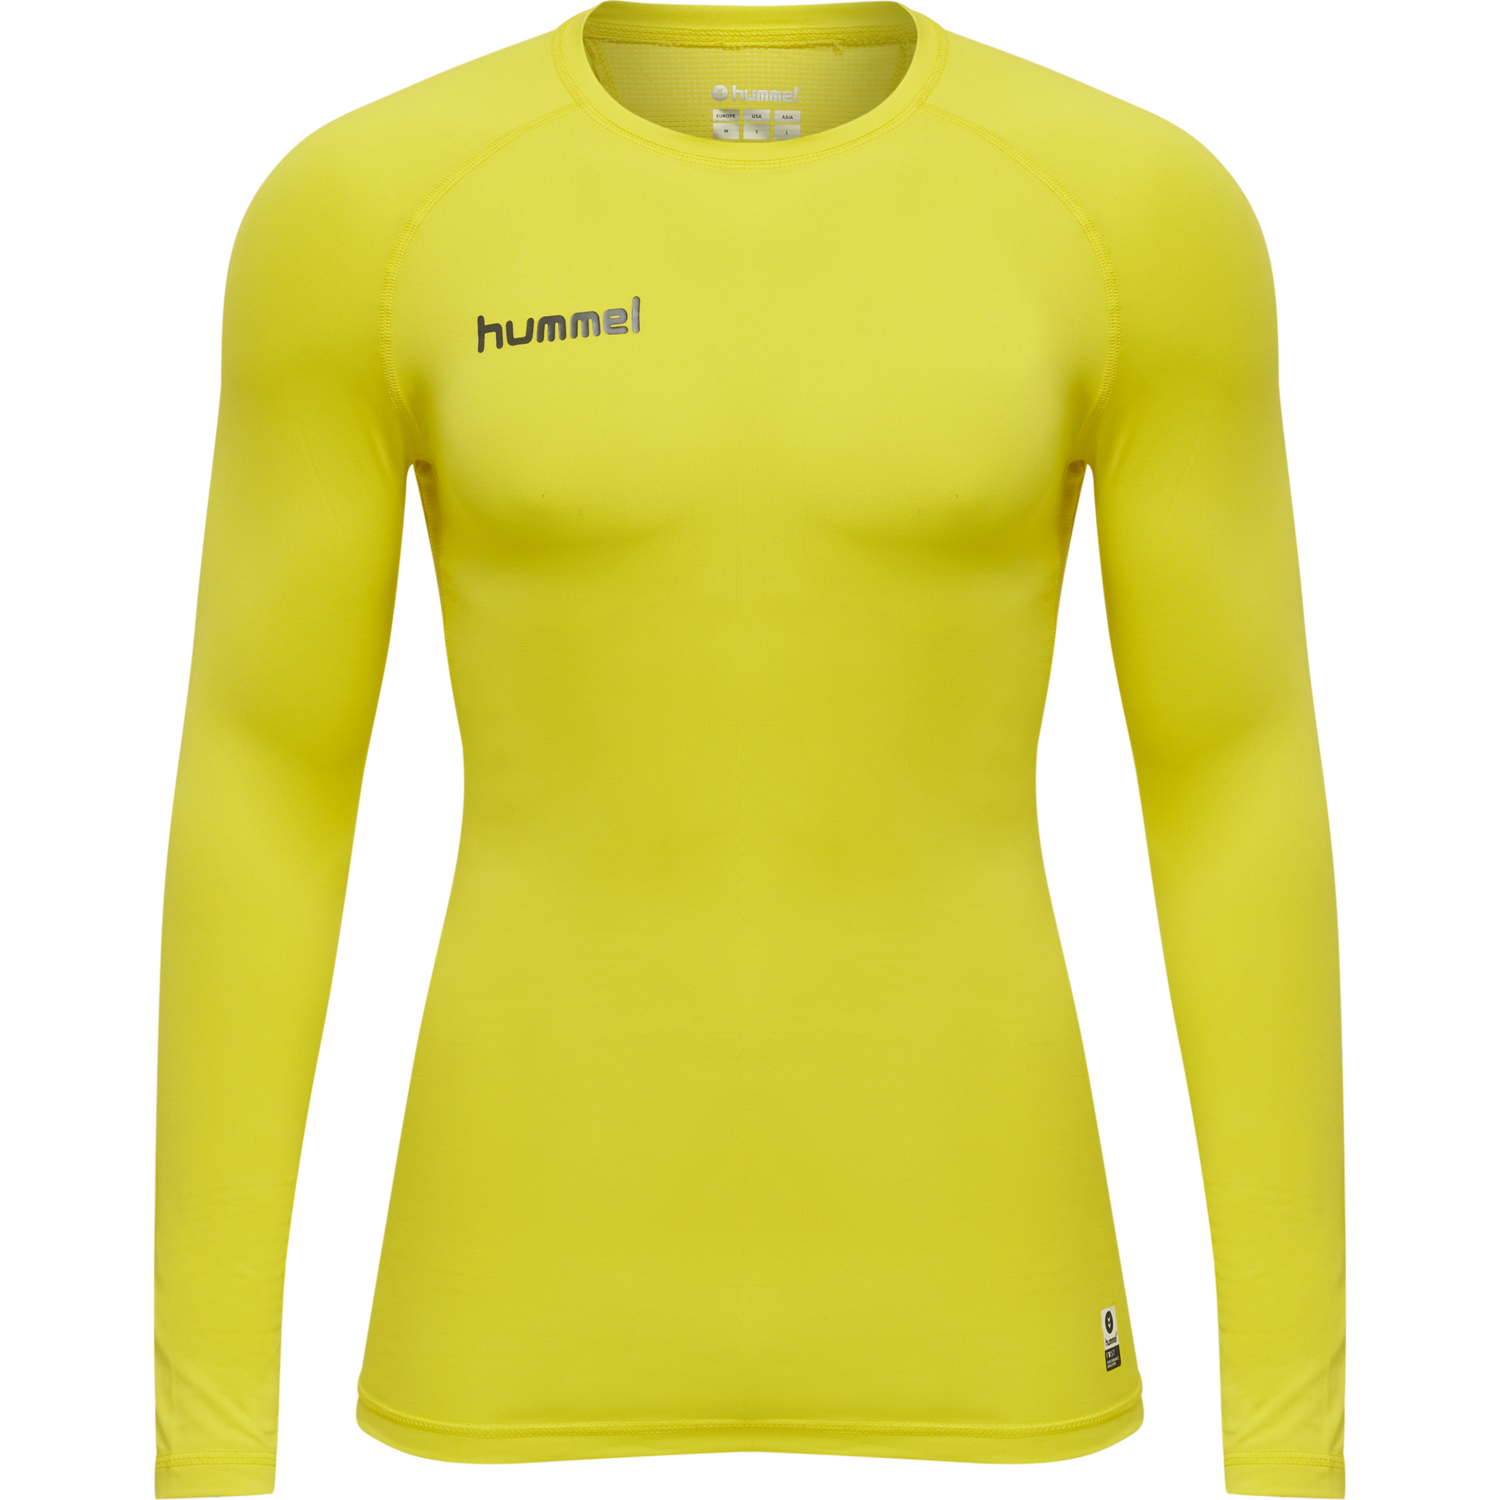 Details about   Hummel Performance Mens Sports Training Running Long Sleeve Jersey Shirt Yellow 